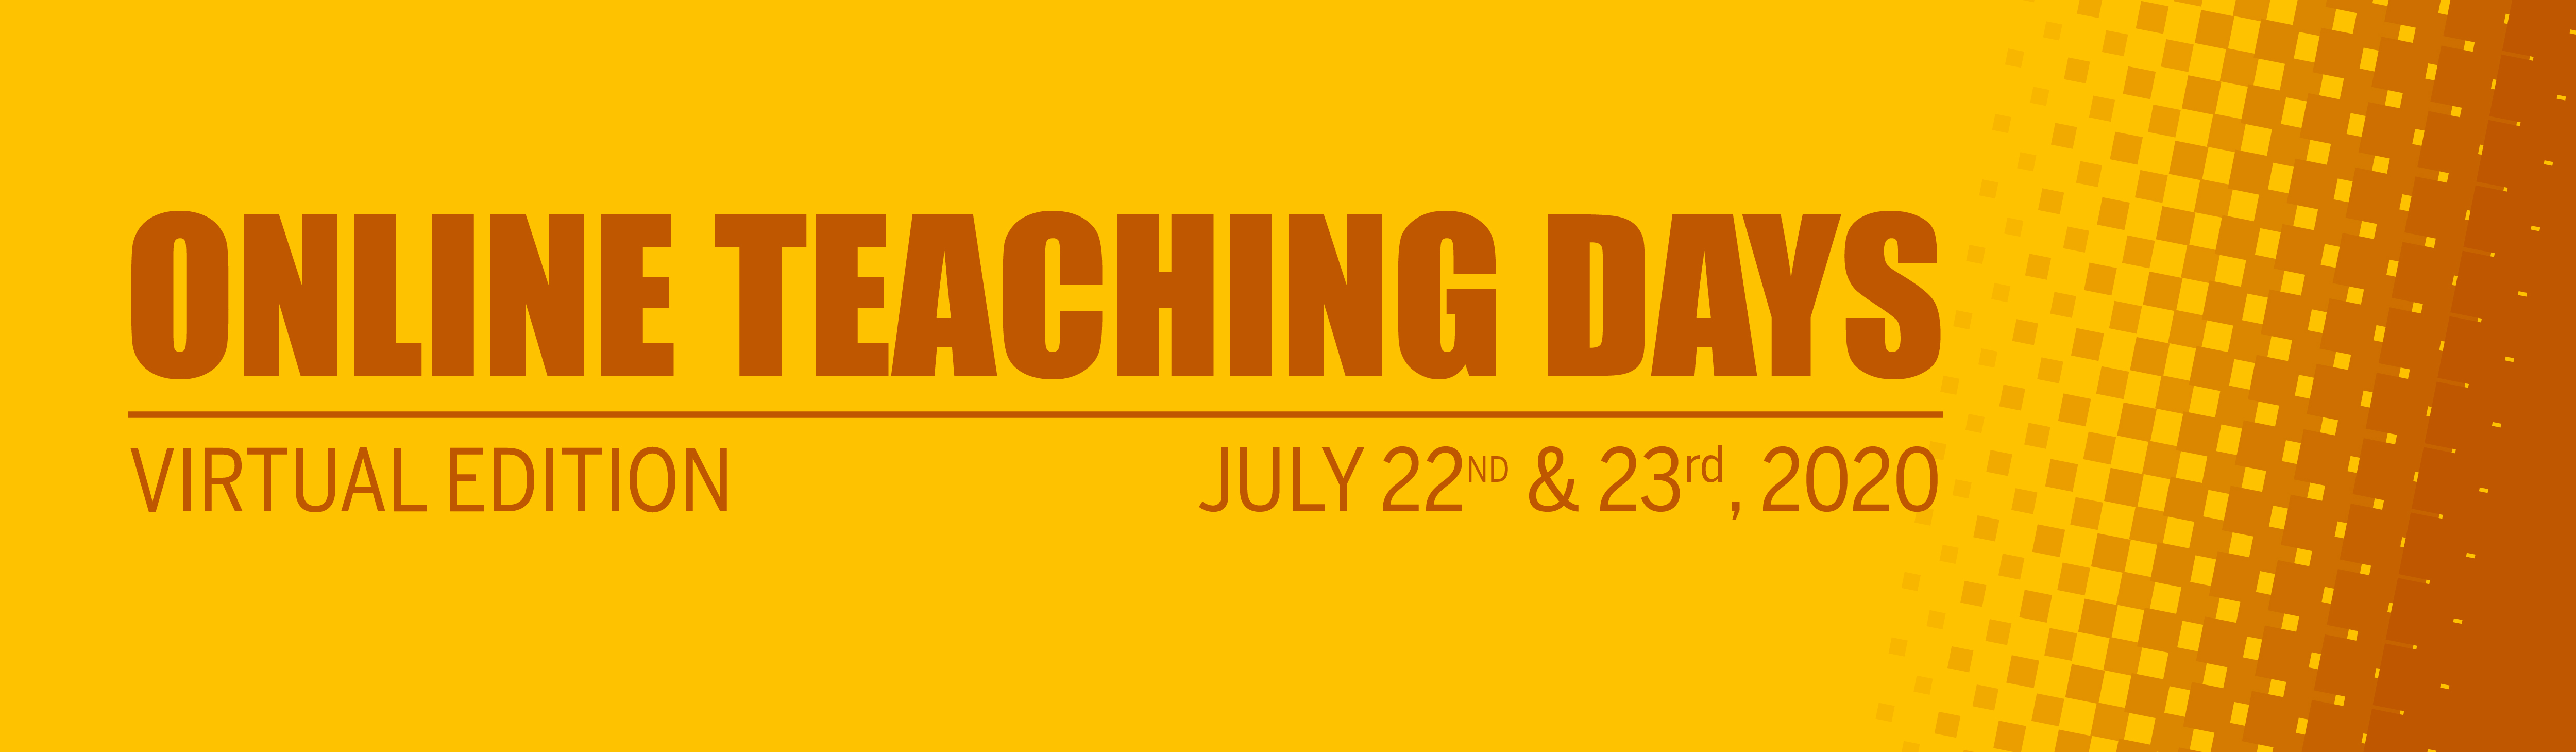 Online Teaching Days Banner 2